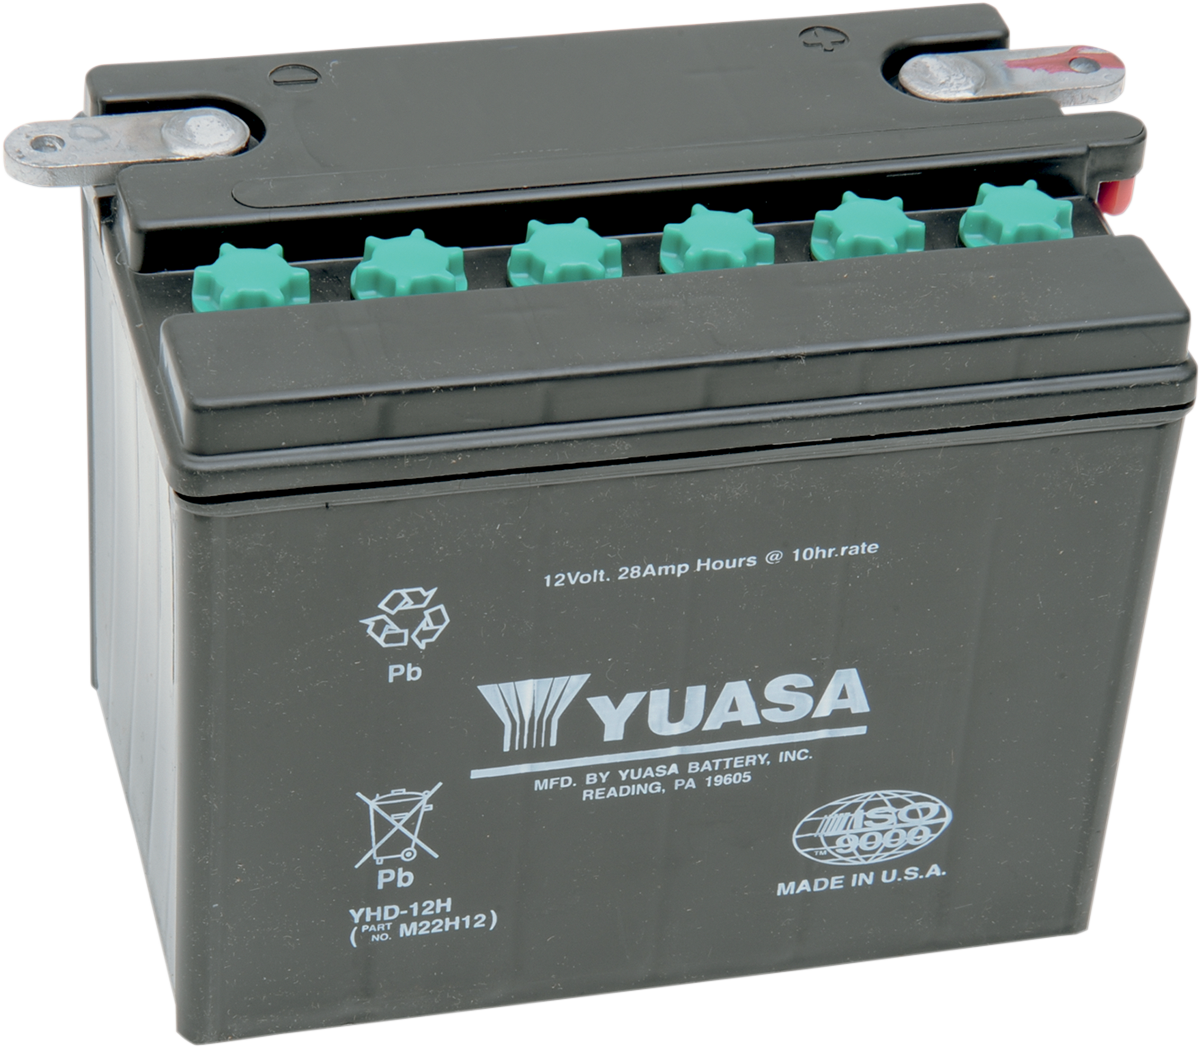 YUASA Battery - YHD-12 YUAM22H12TWN